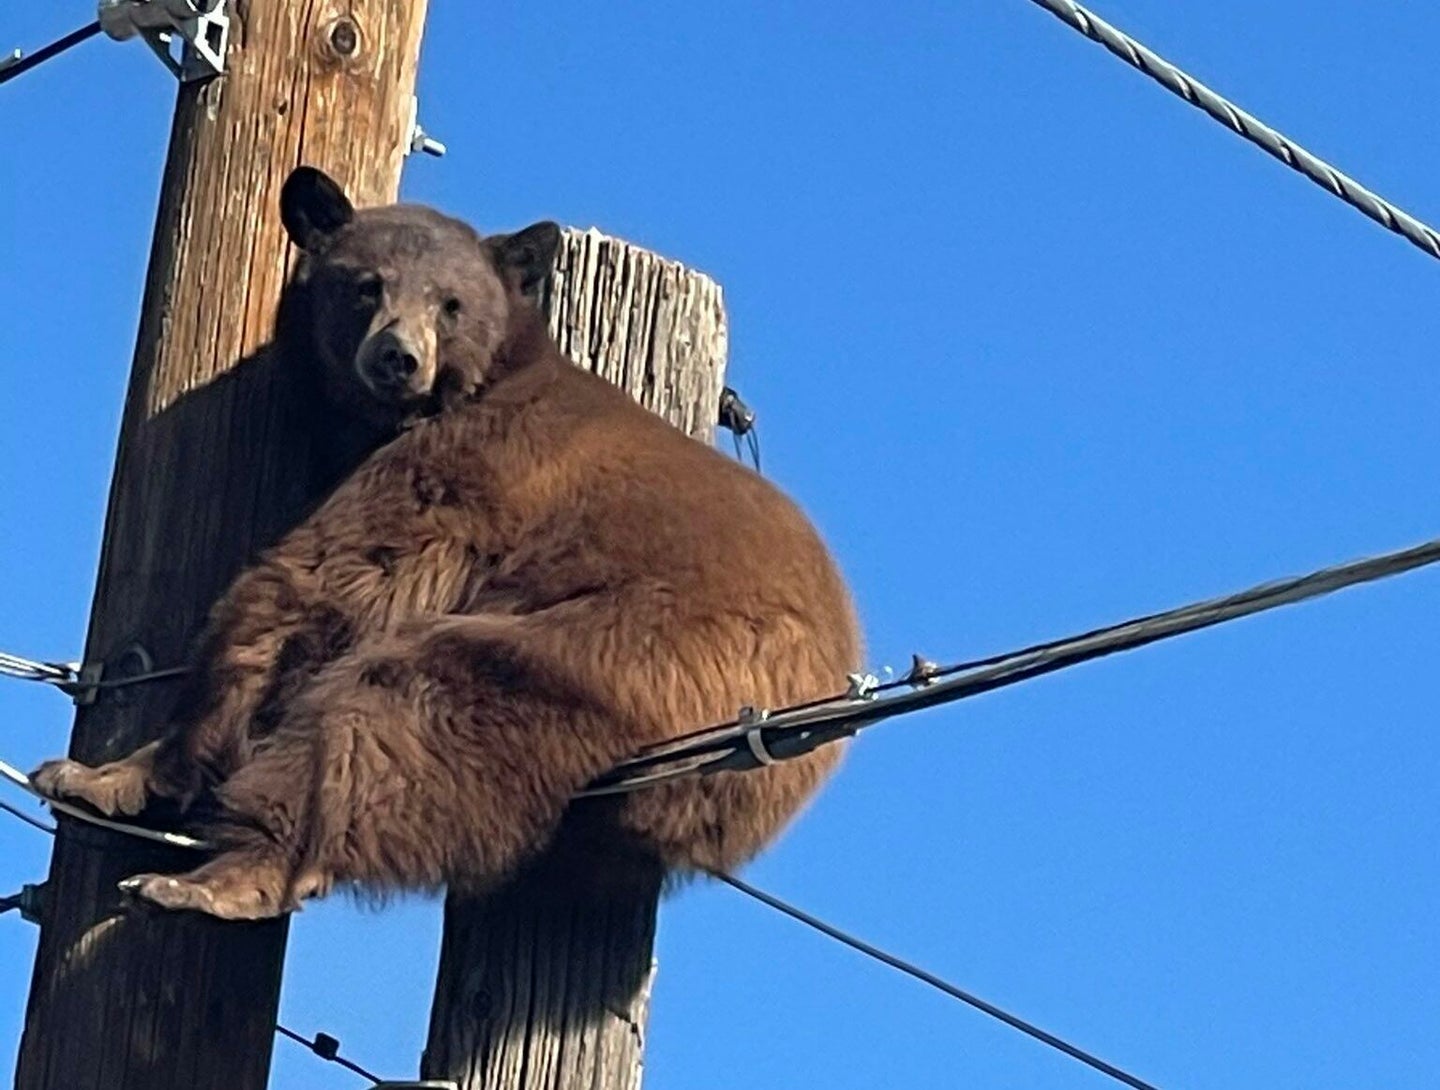 Bear Climbs Power Pole, Avoids Getting Shocked | Field & Stream